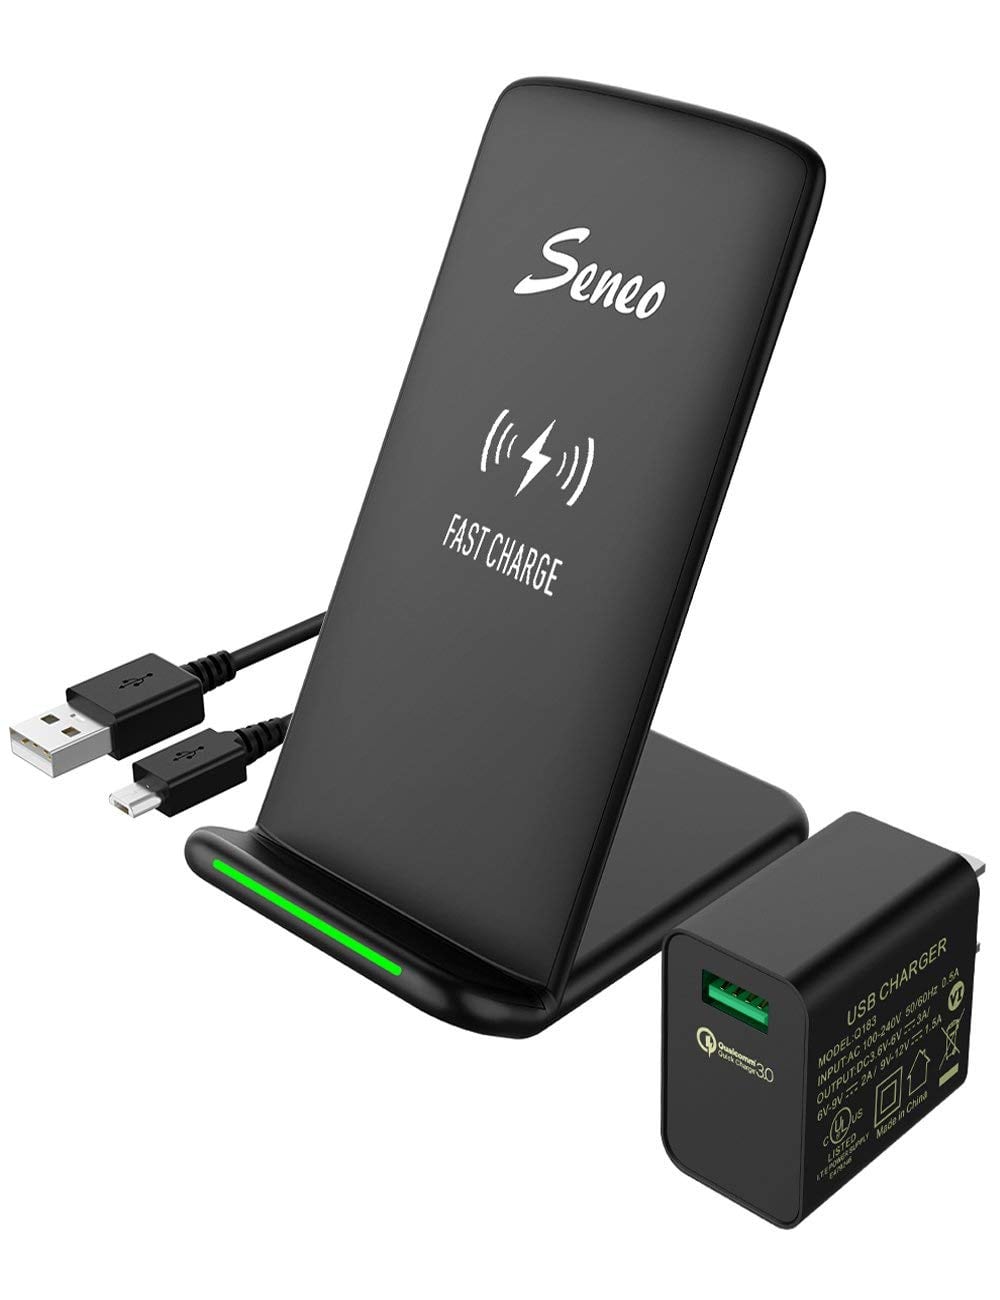 Seneo Wireless Charging Stand